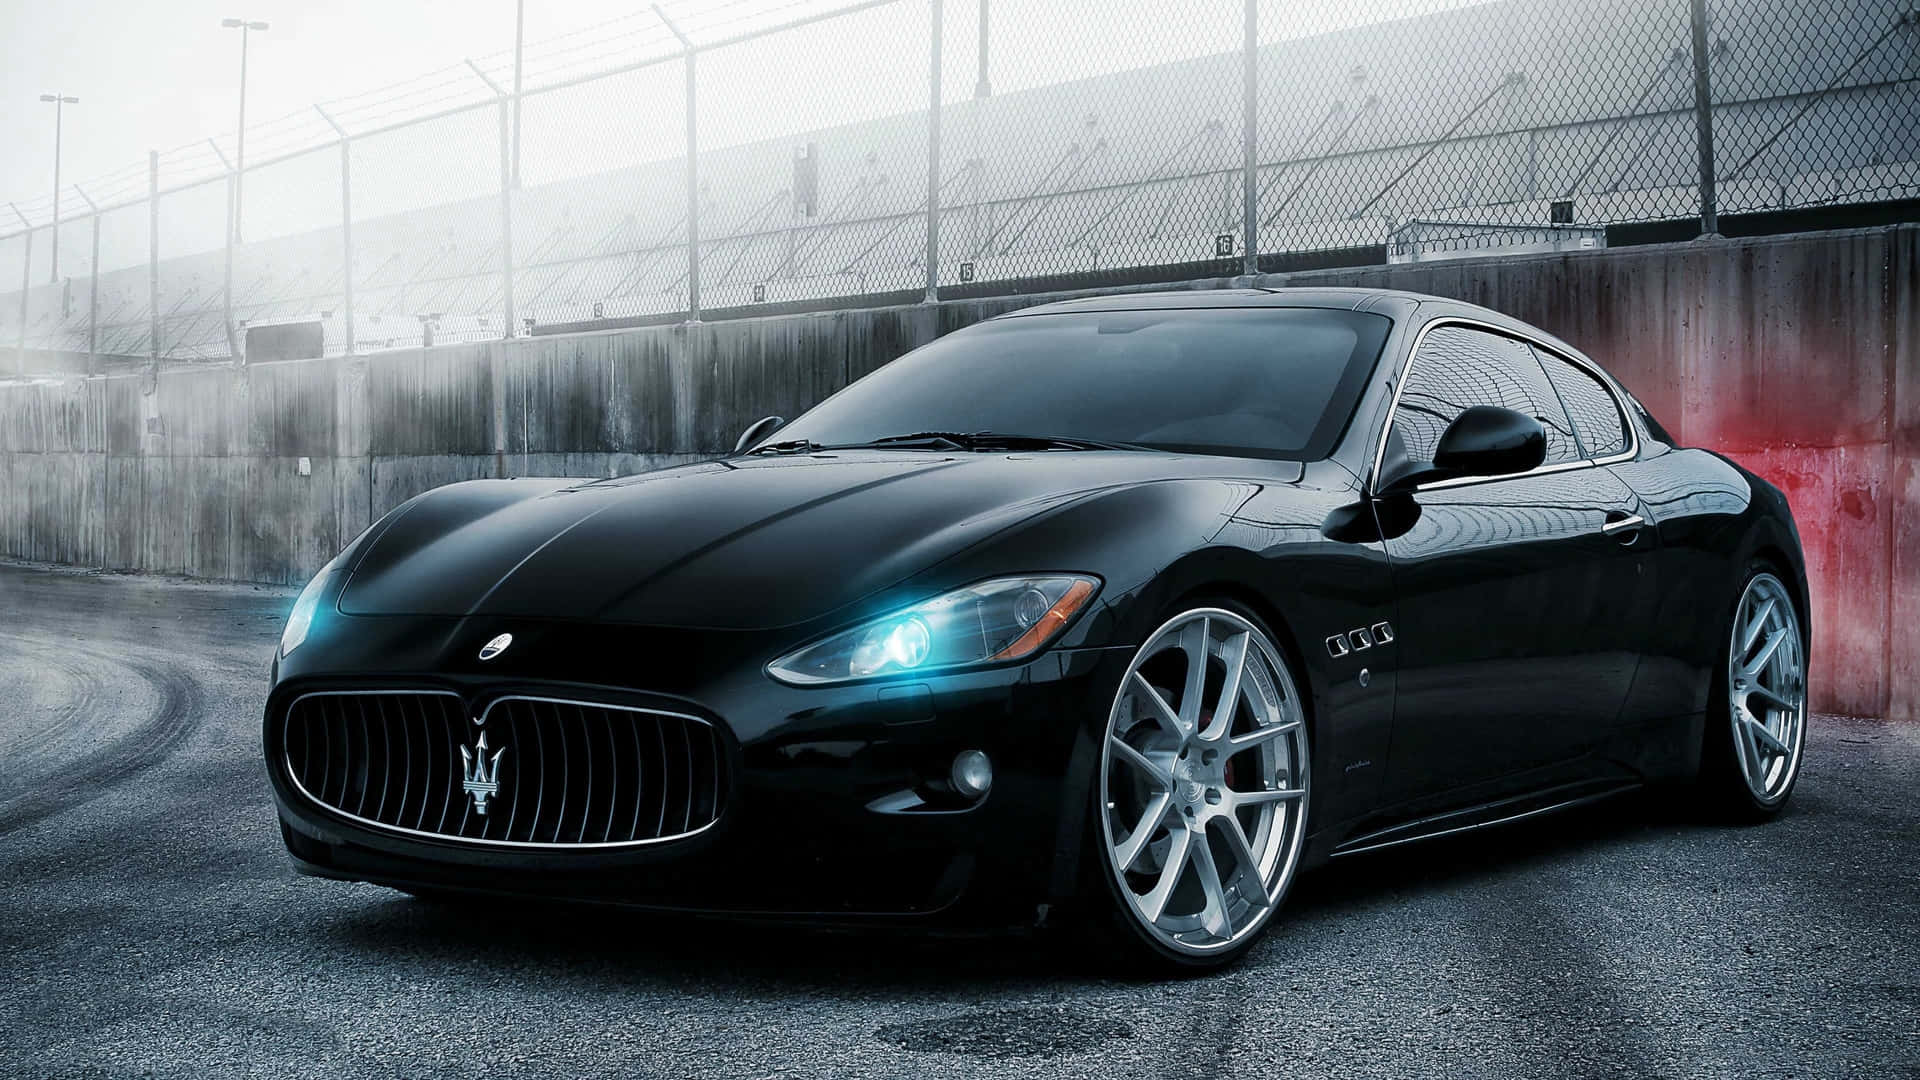 Enjoy the Luxury of a Maserati Wallpaper